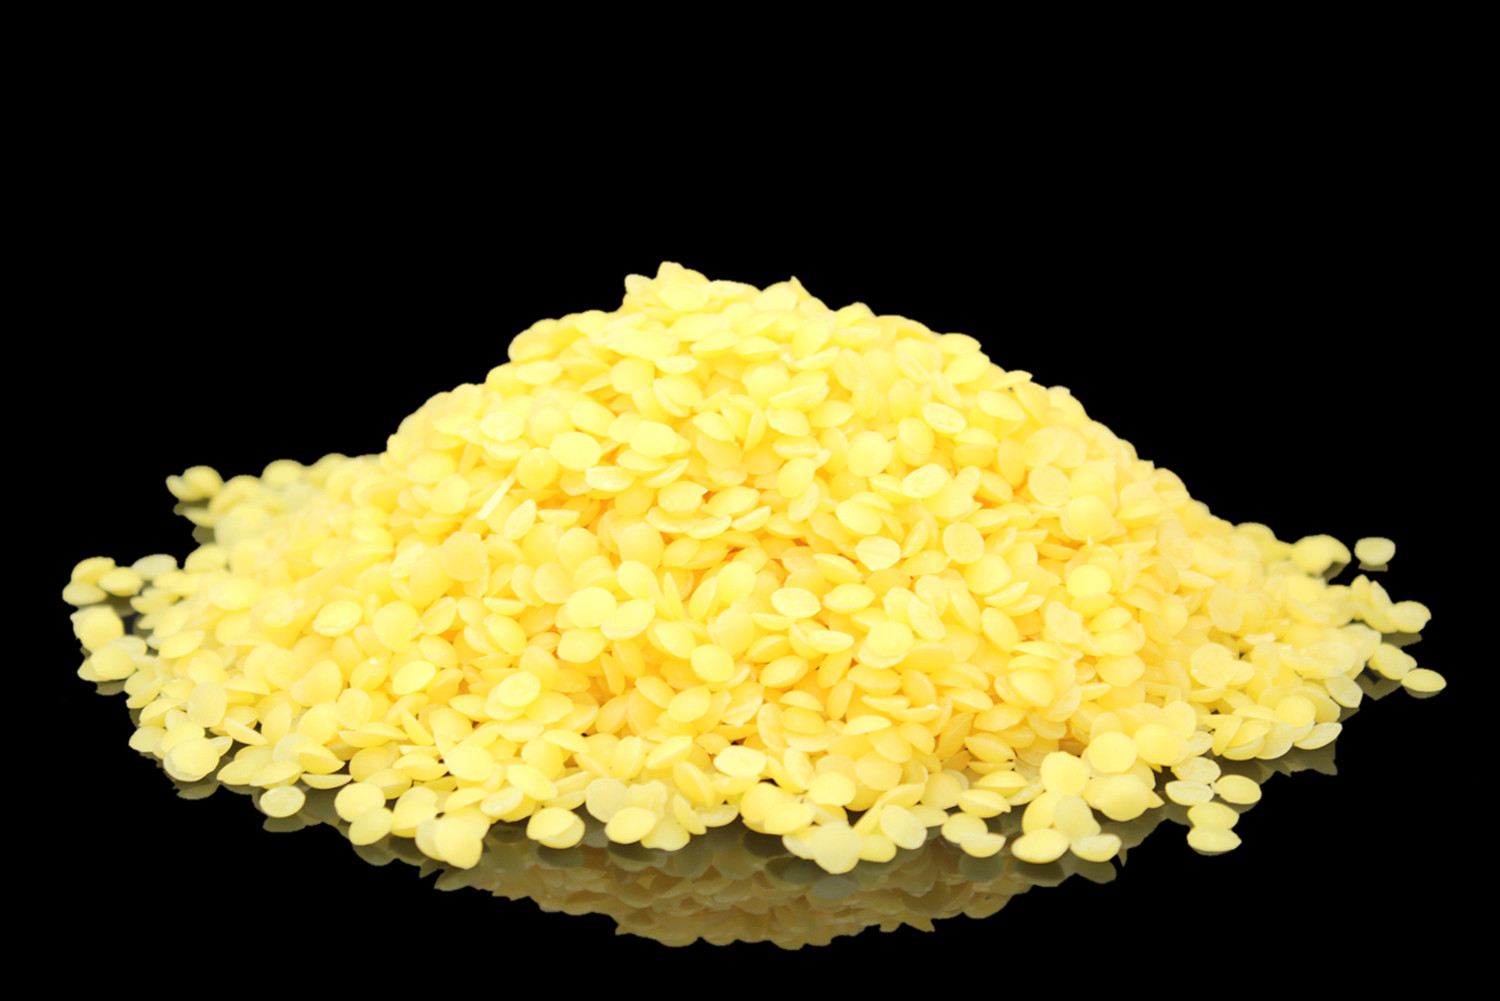 Yellow Beeswax pellets, 1 lb